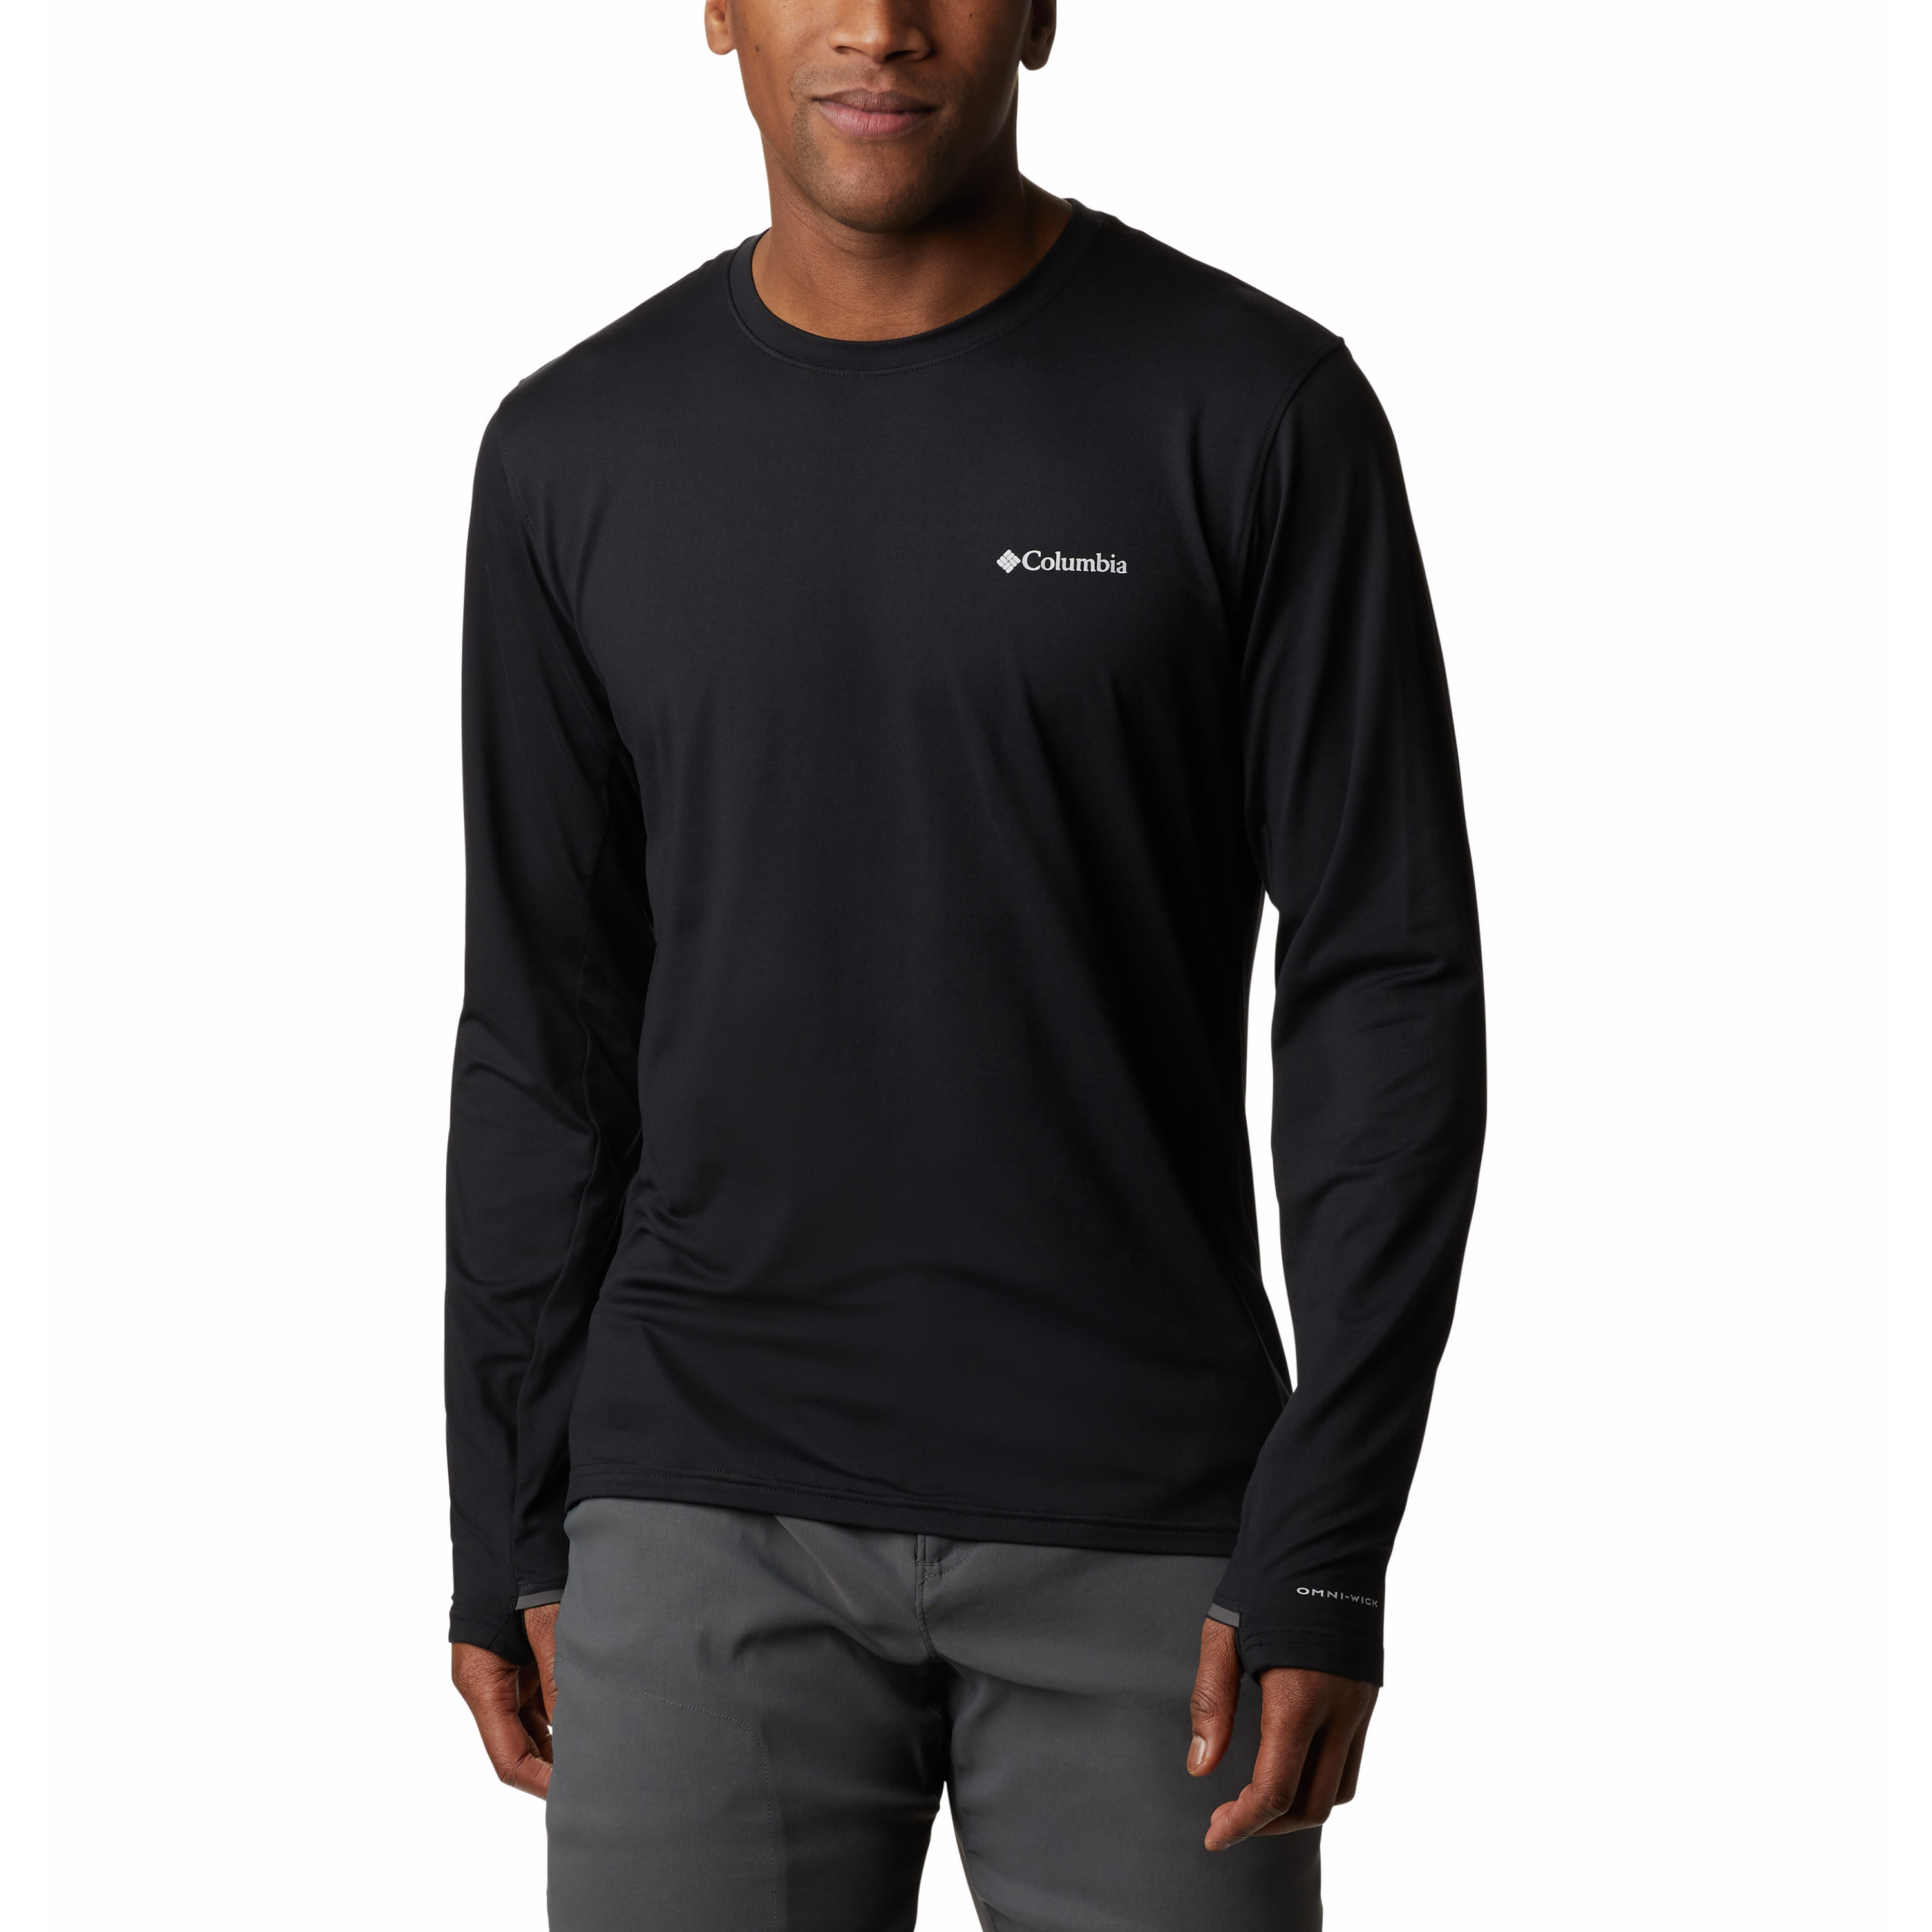 World Wide Sportsman® Men's Raglan Long-Sleeve Crew Shirt